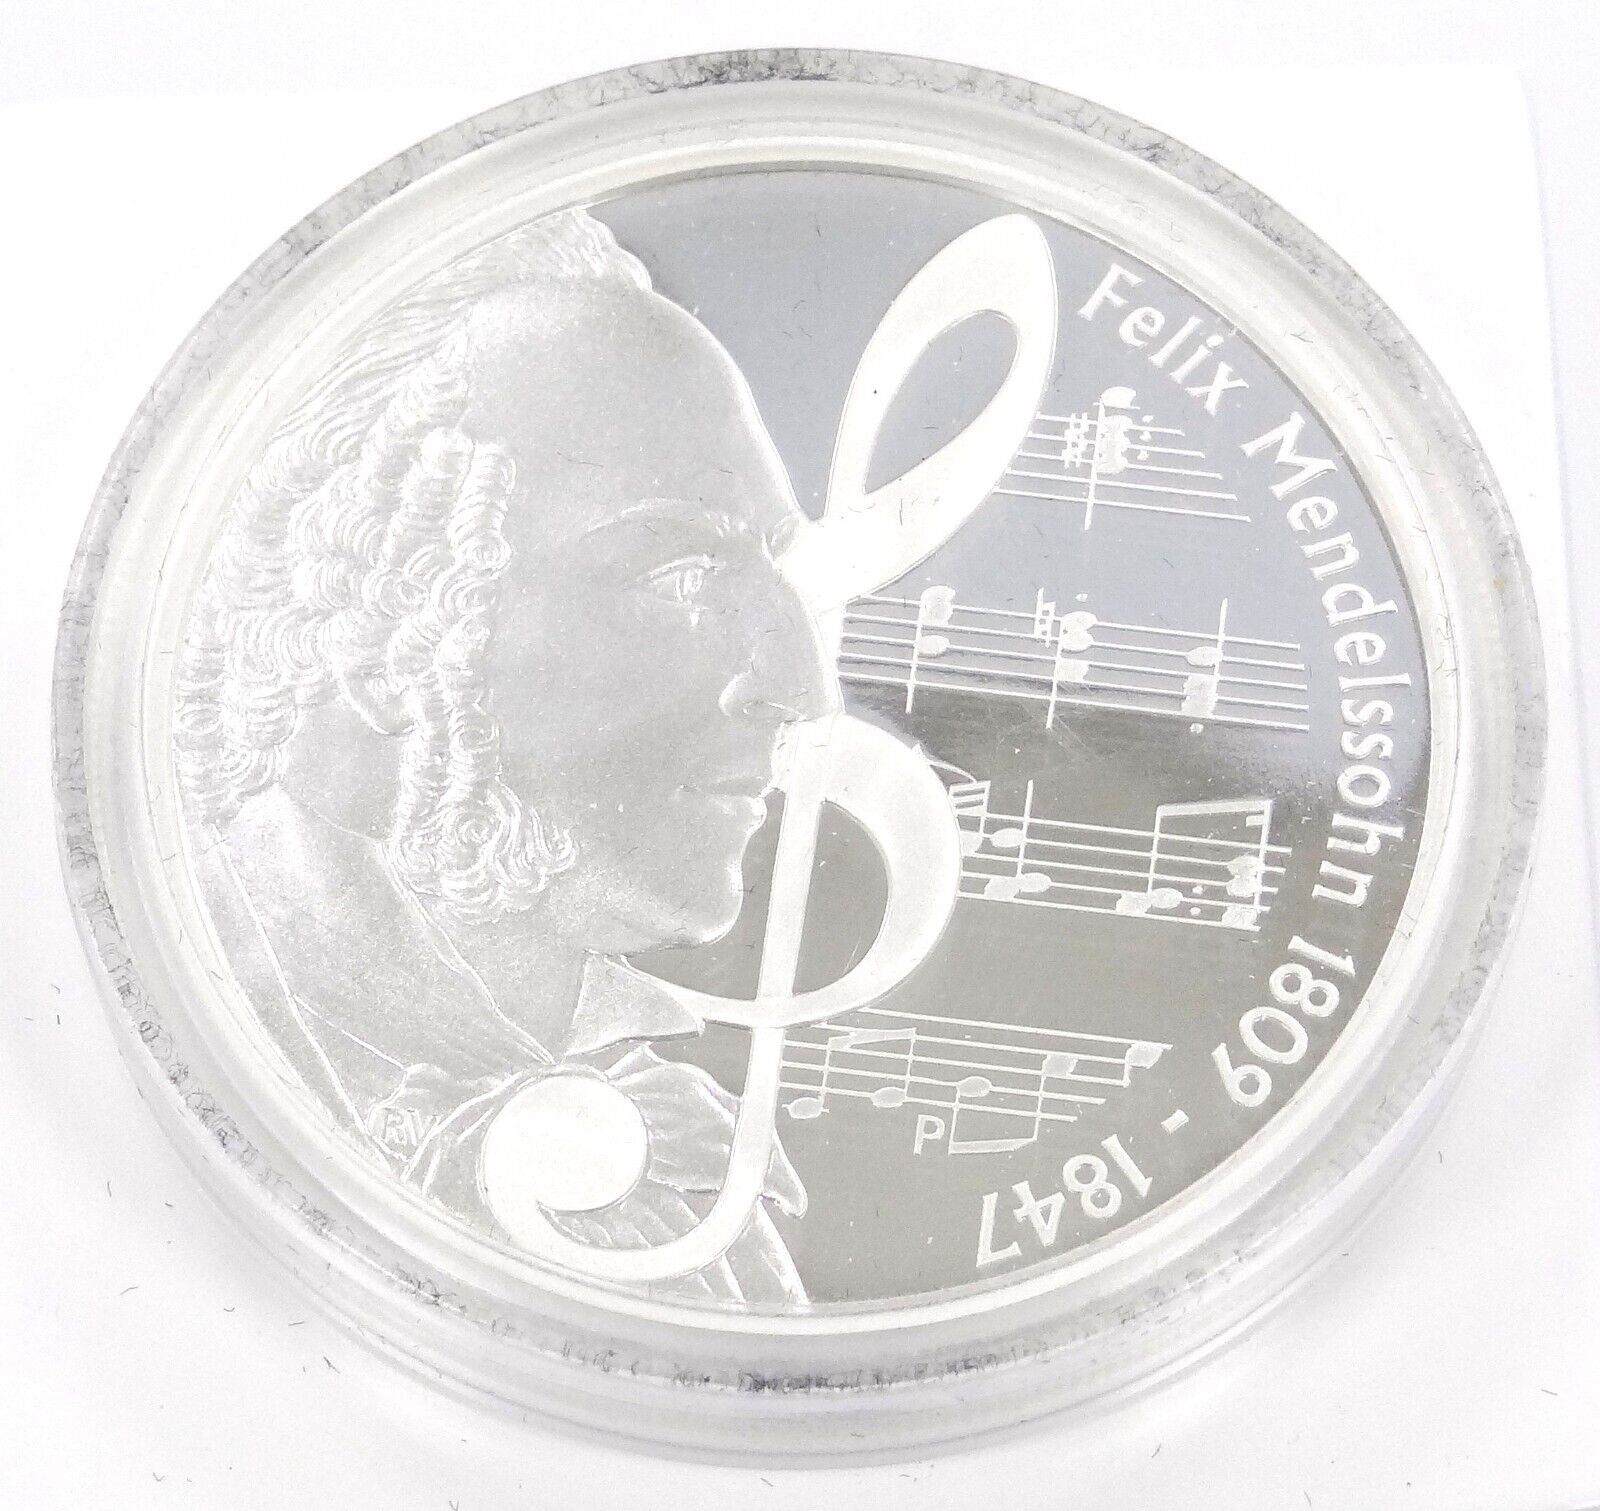 1 Oz Silver Coin 2009 $1 Tuvalu Great Composers Felix Mendelssohn 1809-1847-classypw.com-2